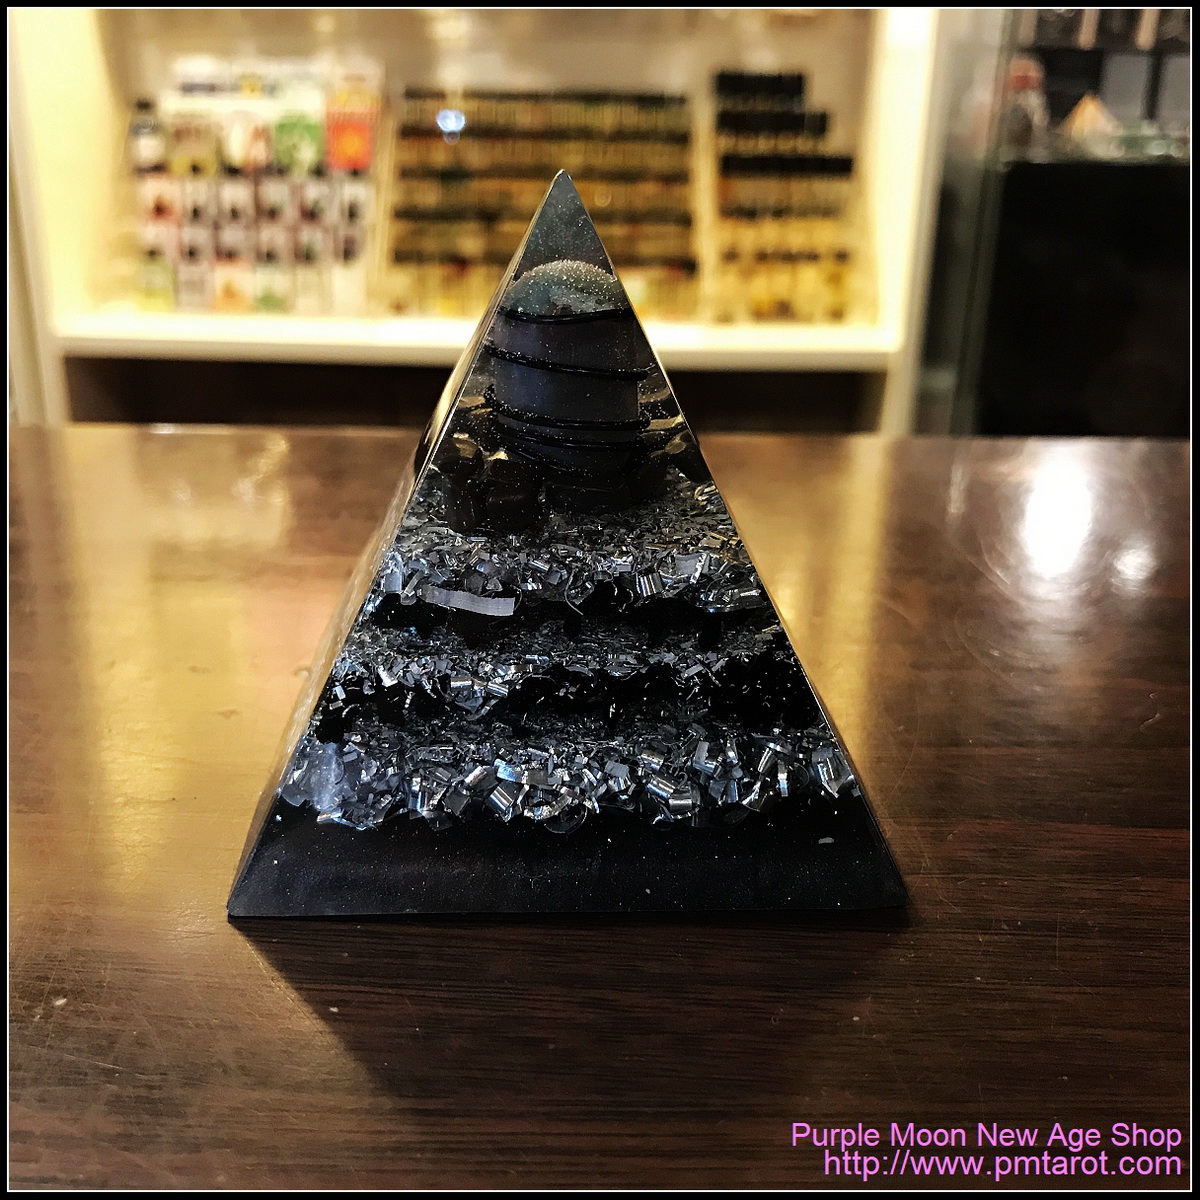 Avalon Magick x Oplusnet - Bloodstone High Quality Orgonite Pyramid